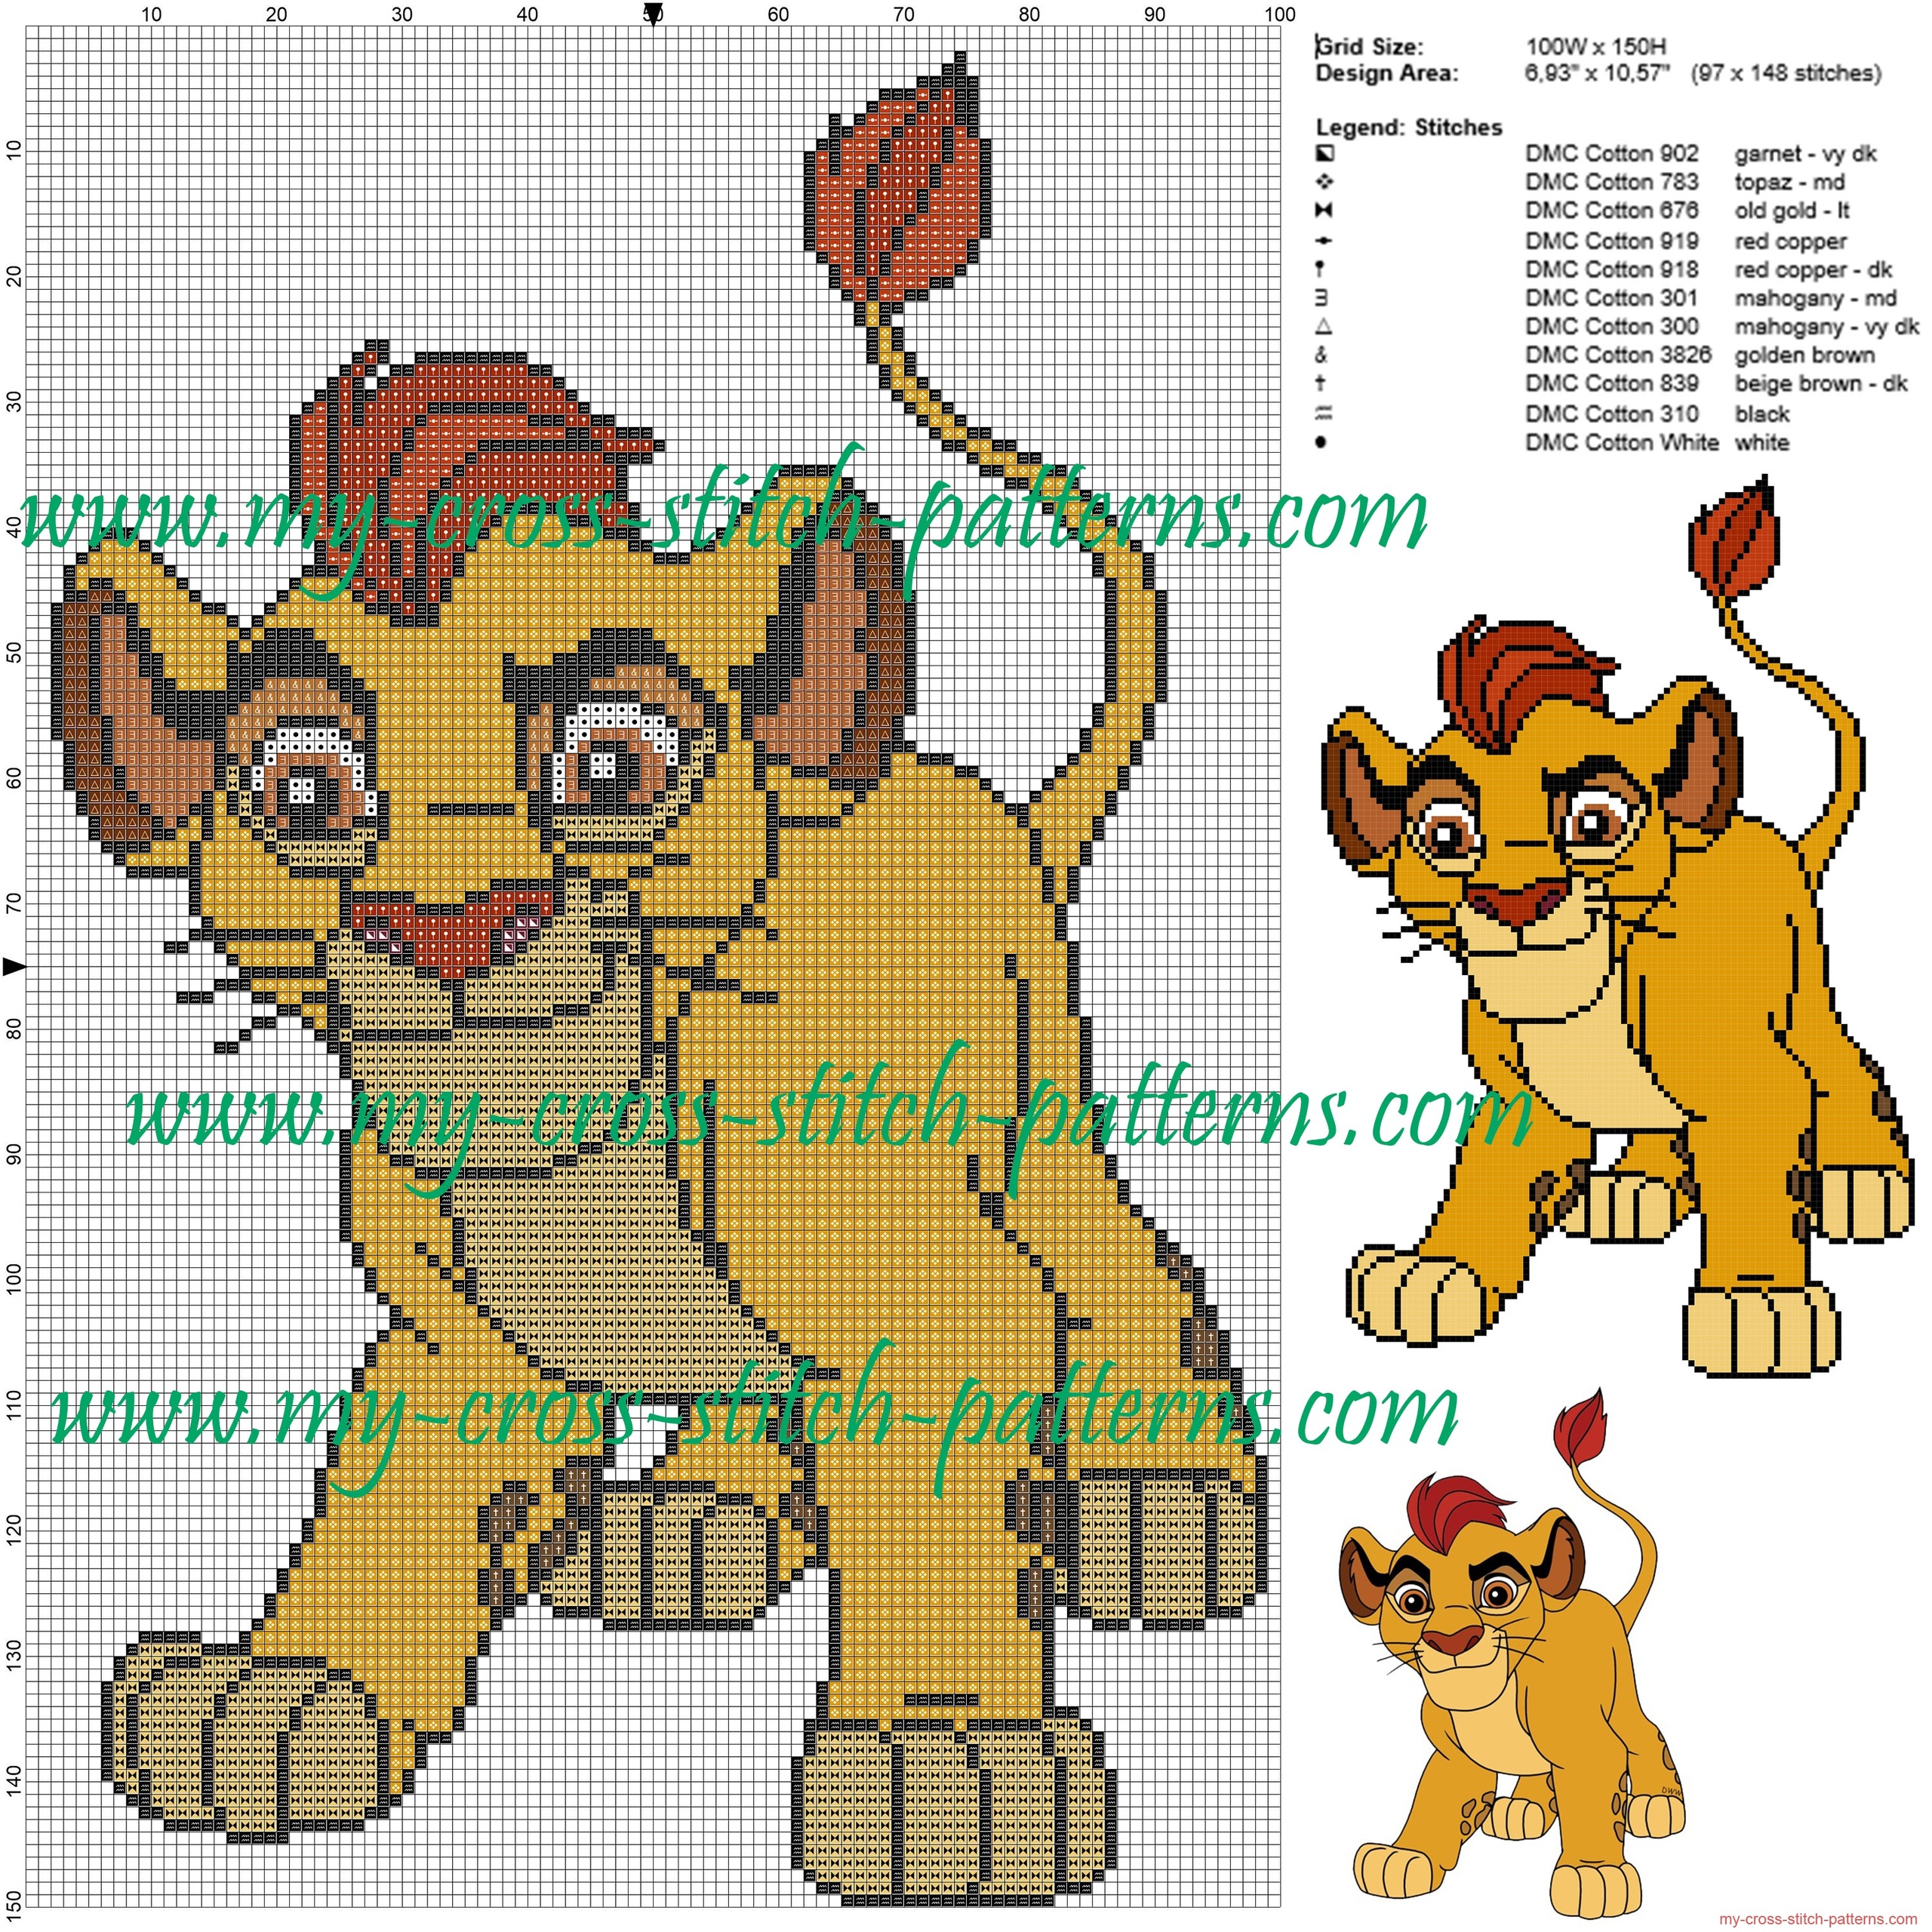 kion_the_lion_king_cross_stitch_pattern